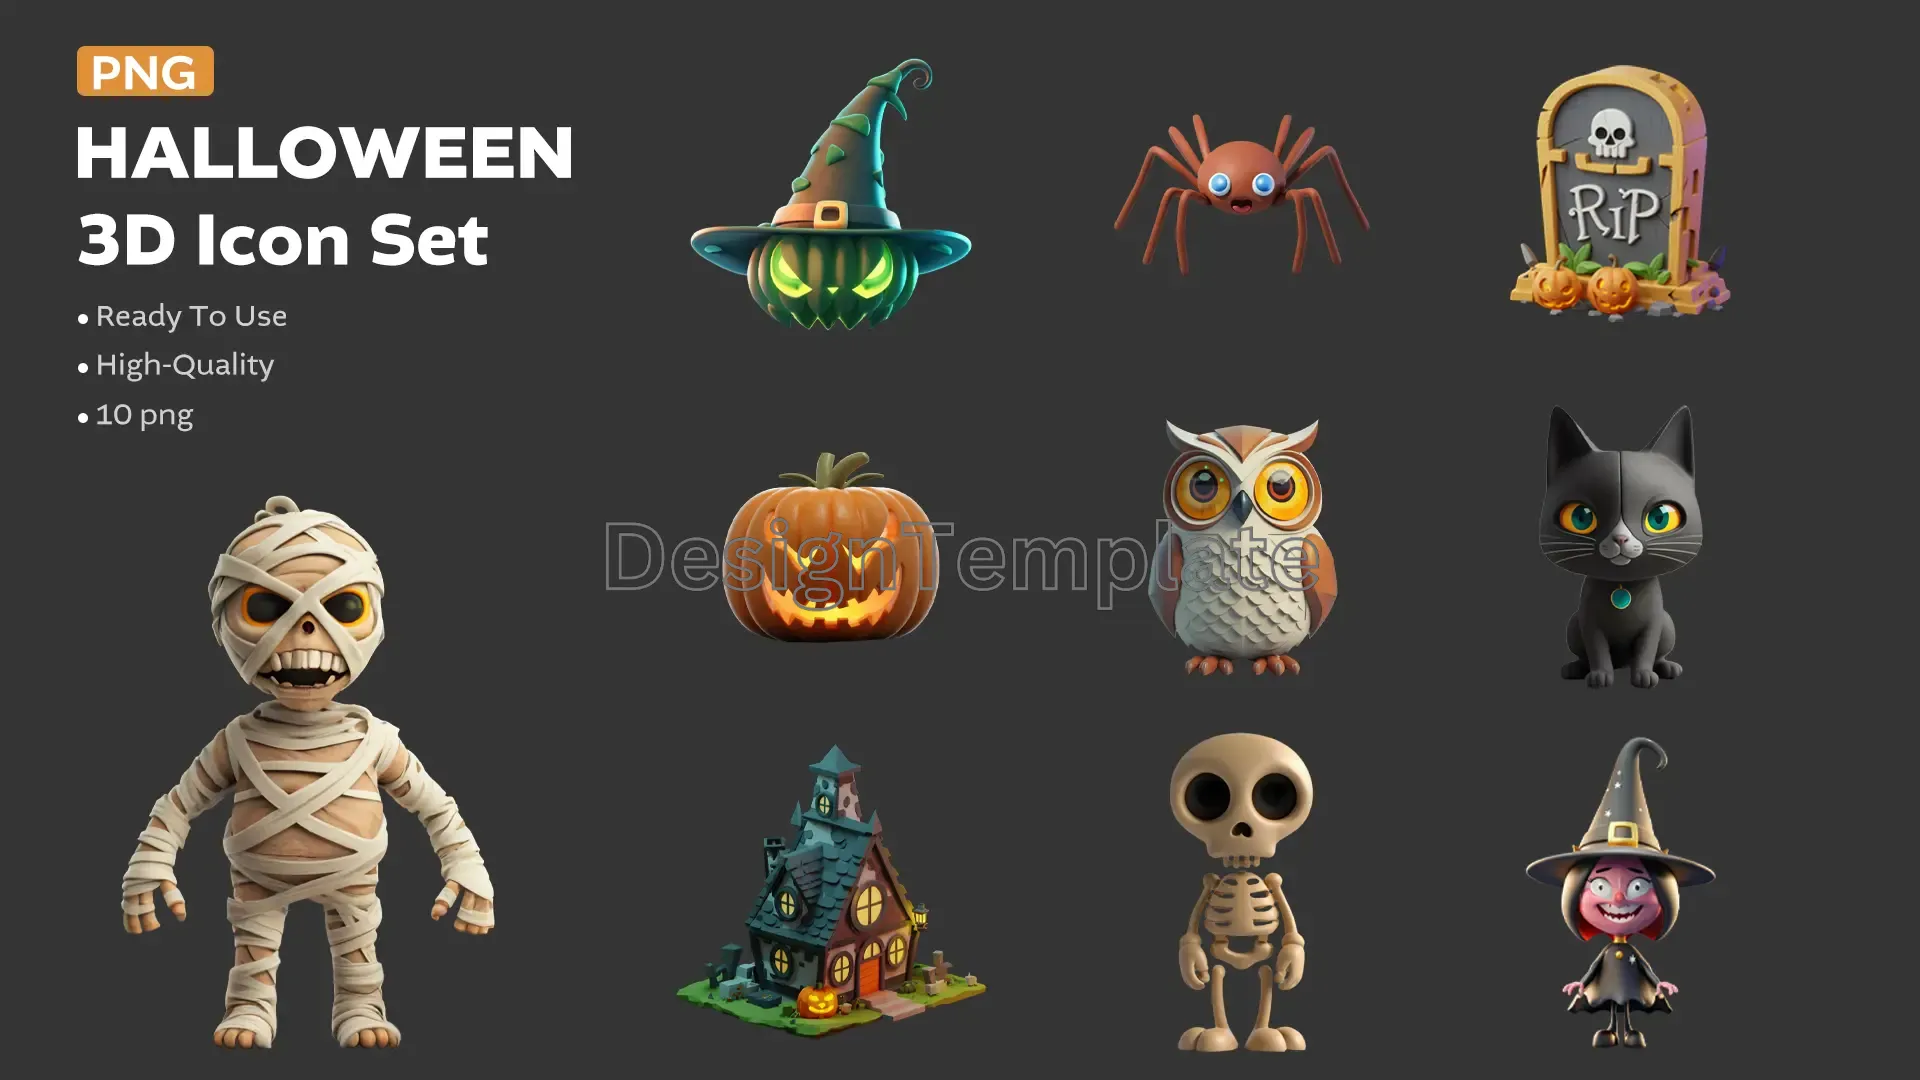 Creepy Characters Halloween 3D Elements Pack